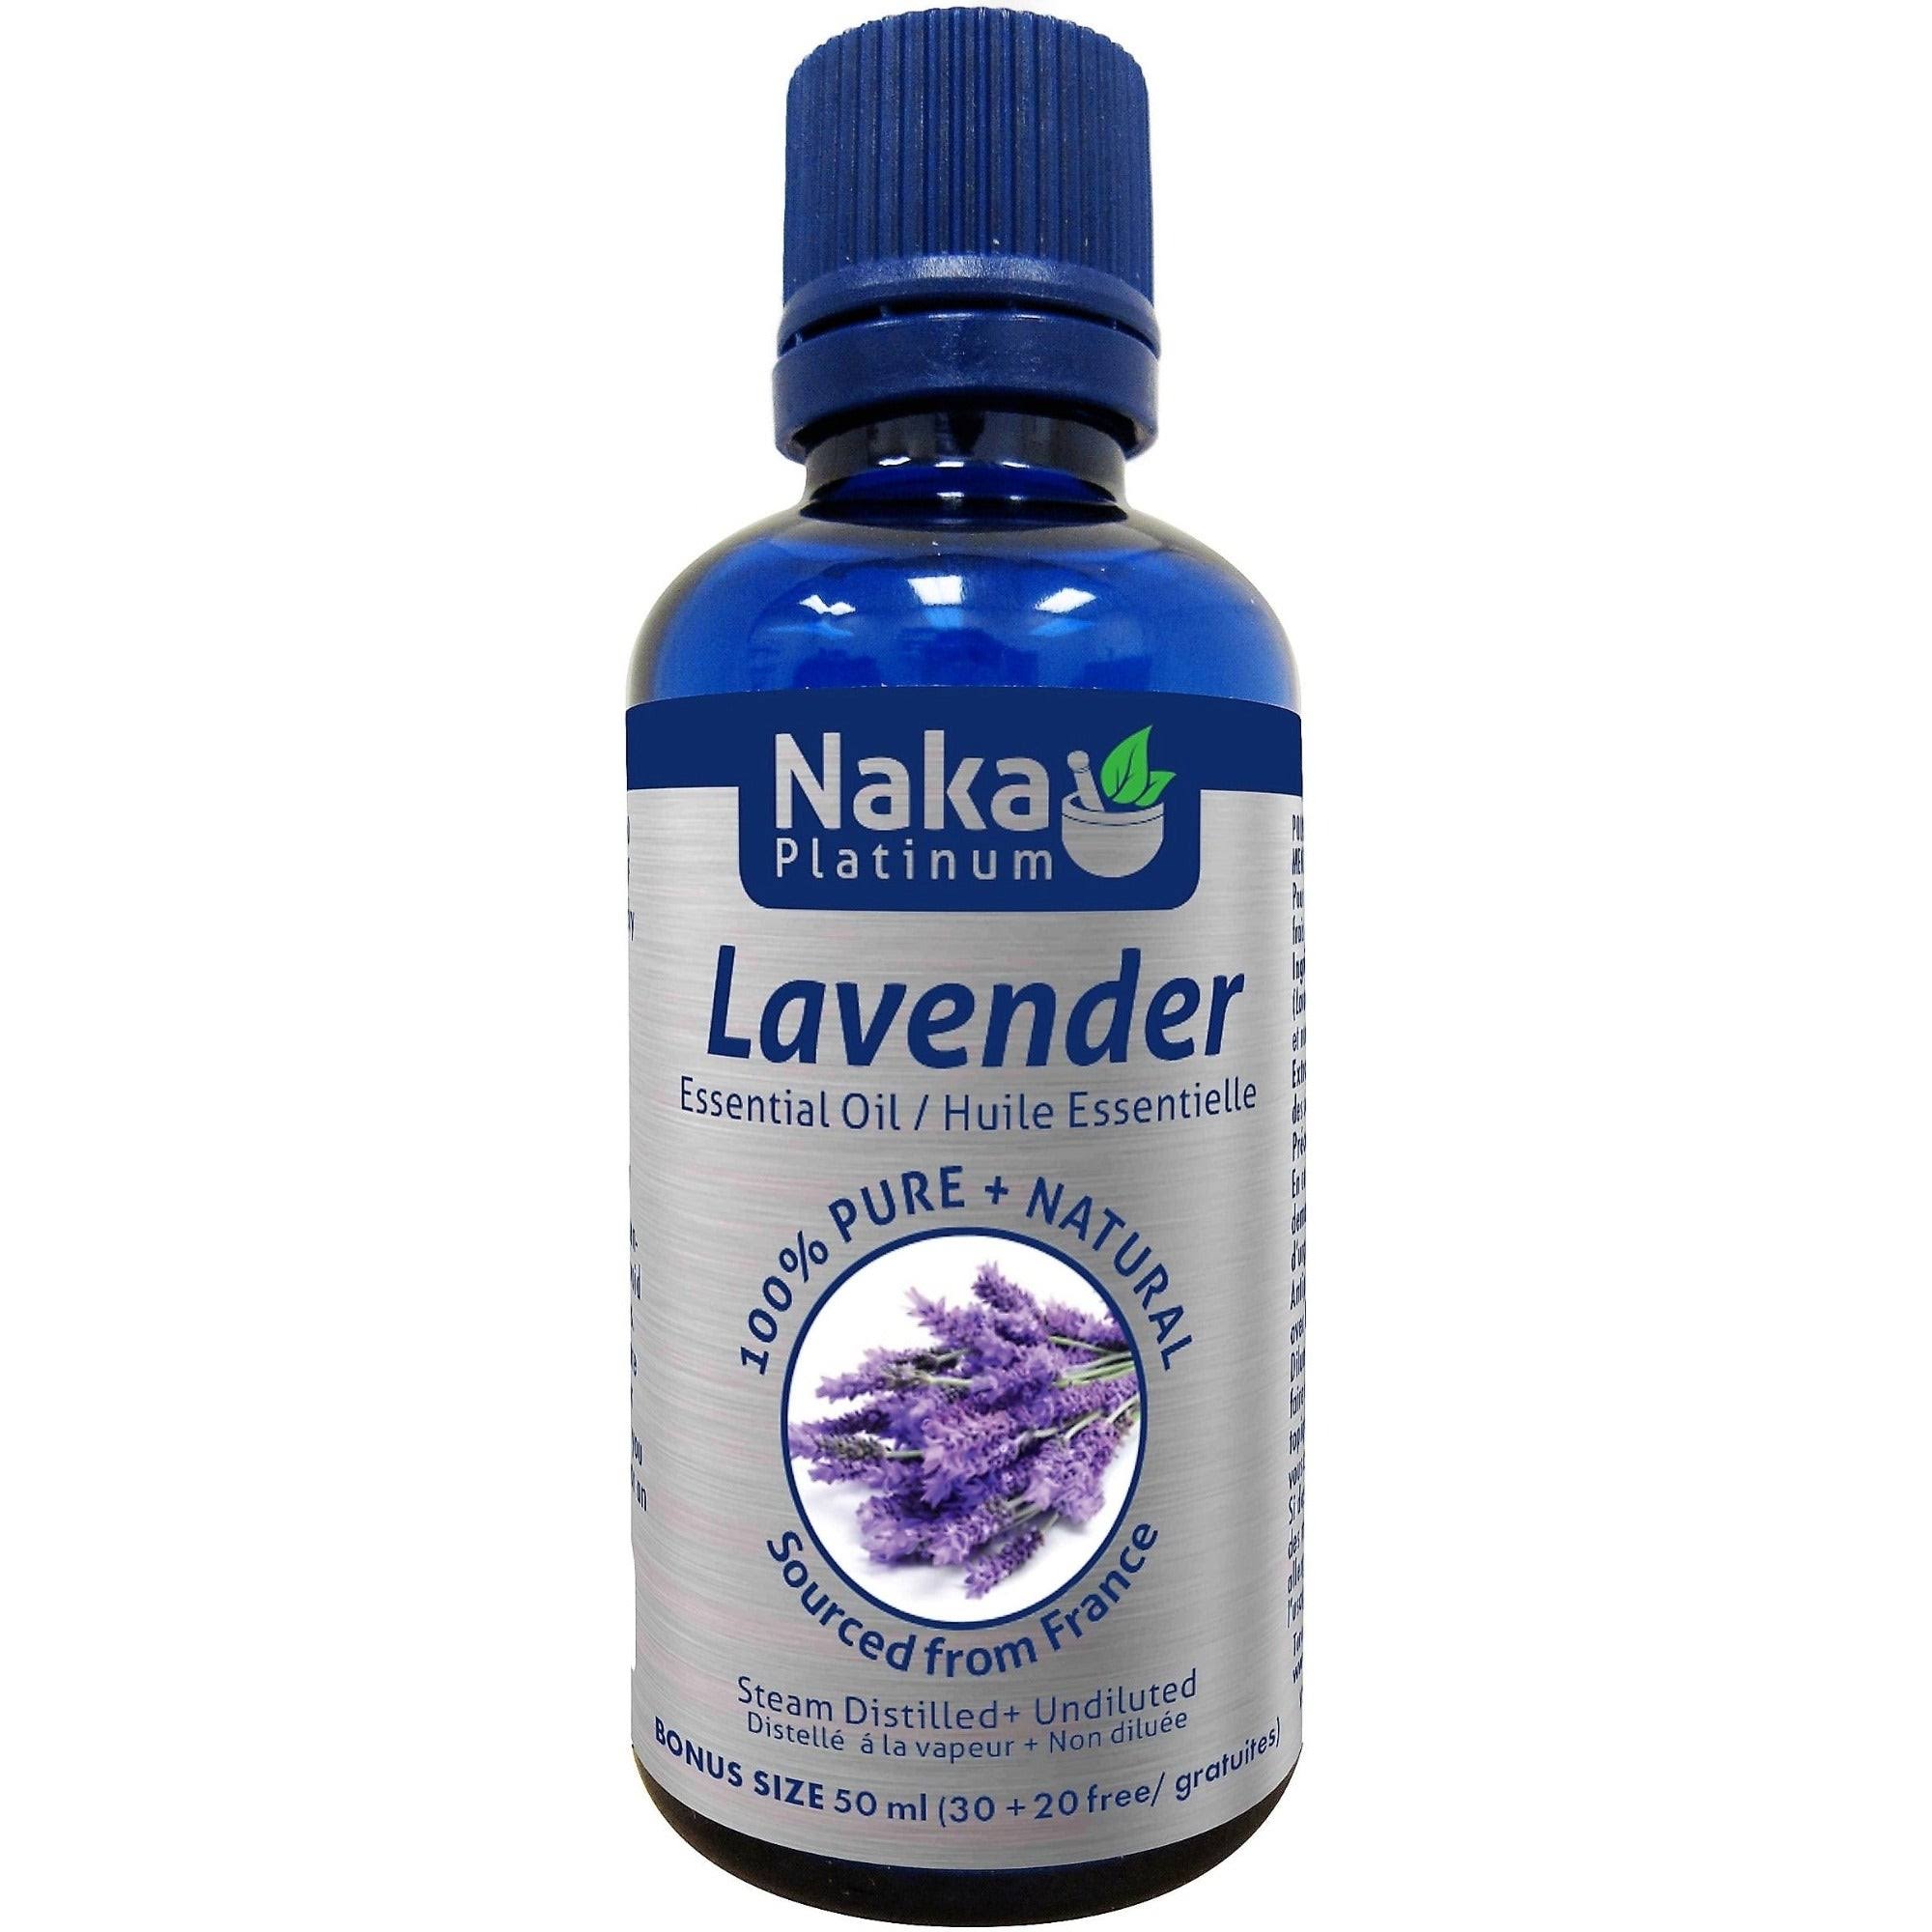 Naka Platinum Lavender Essential Oil - 50 mL